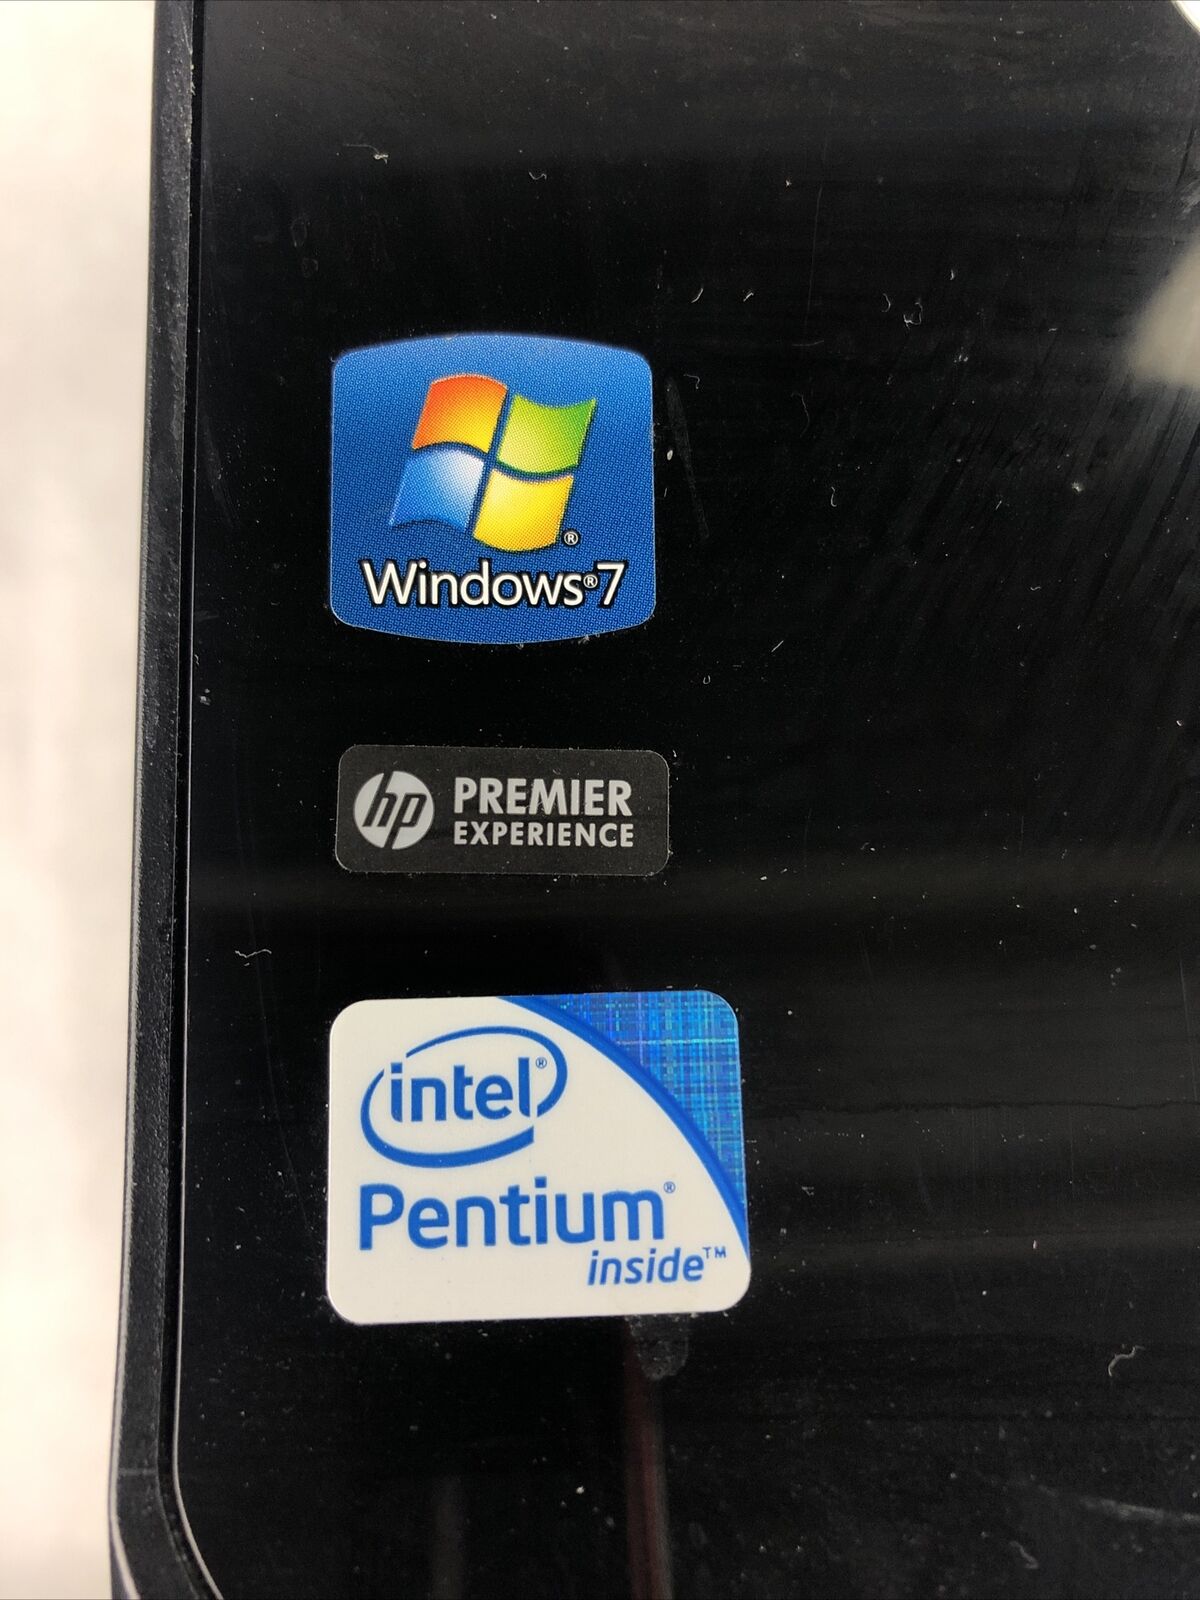 HP Pavilion P6-2218 MT Intel Pentium G-620 2.6GHz 4GB RAM No HDD No OS